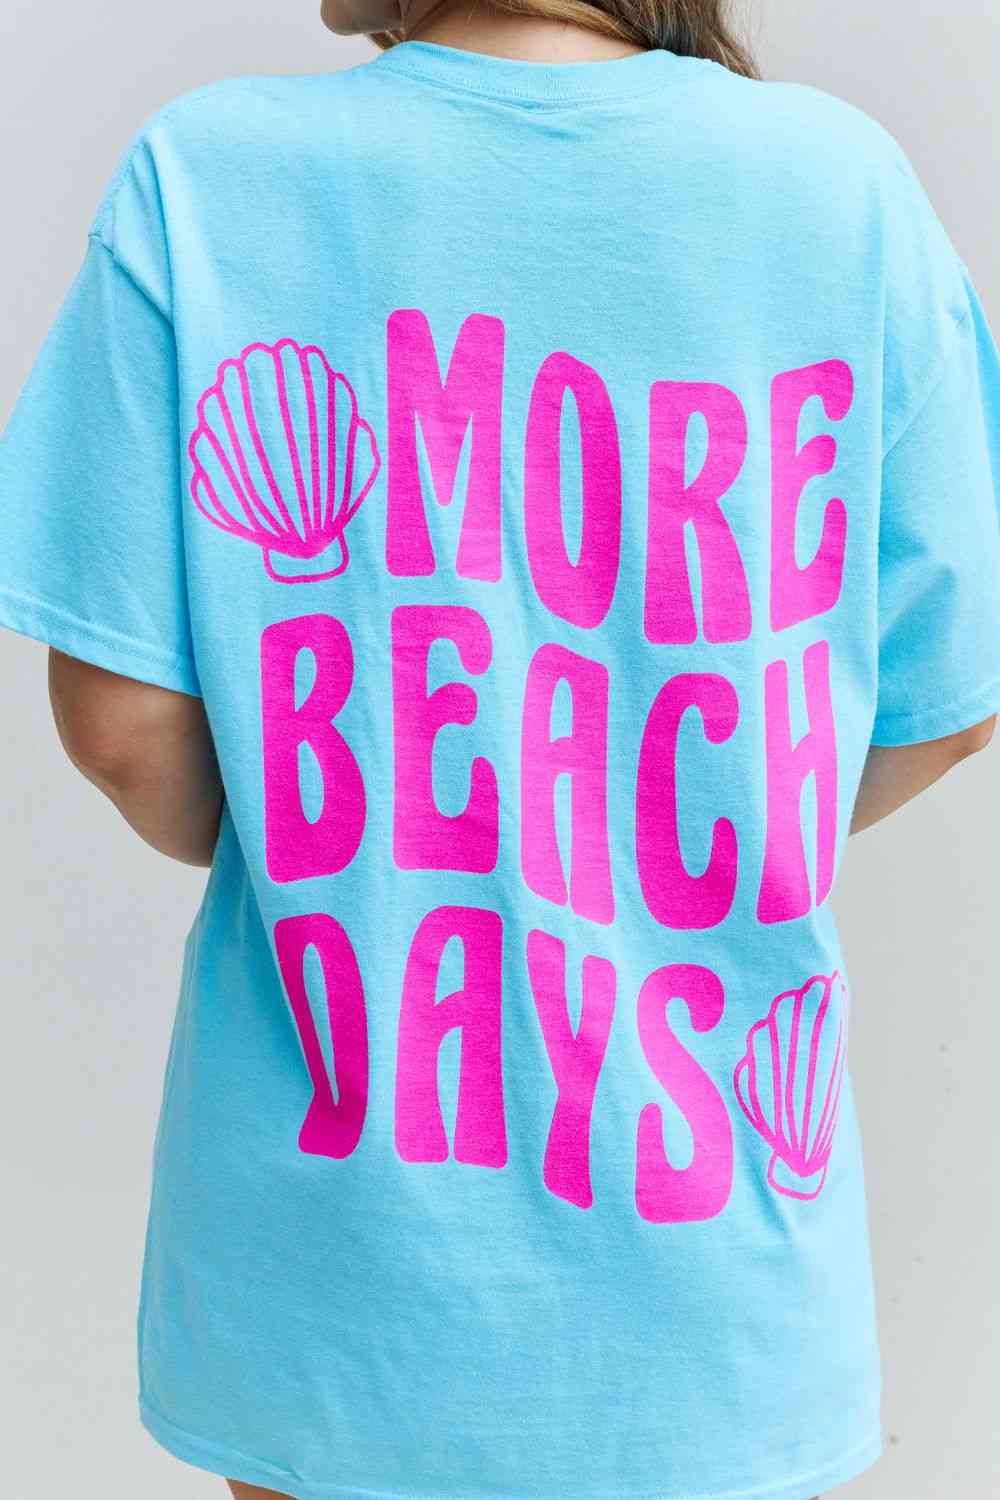 "More Beach Days" Oversized Graphic T-Shirt